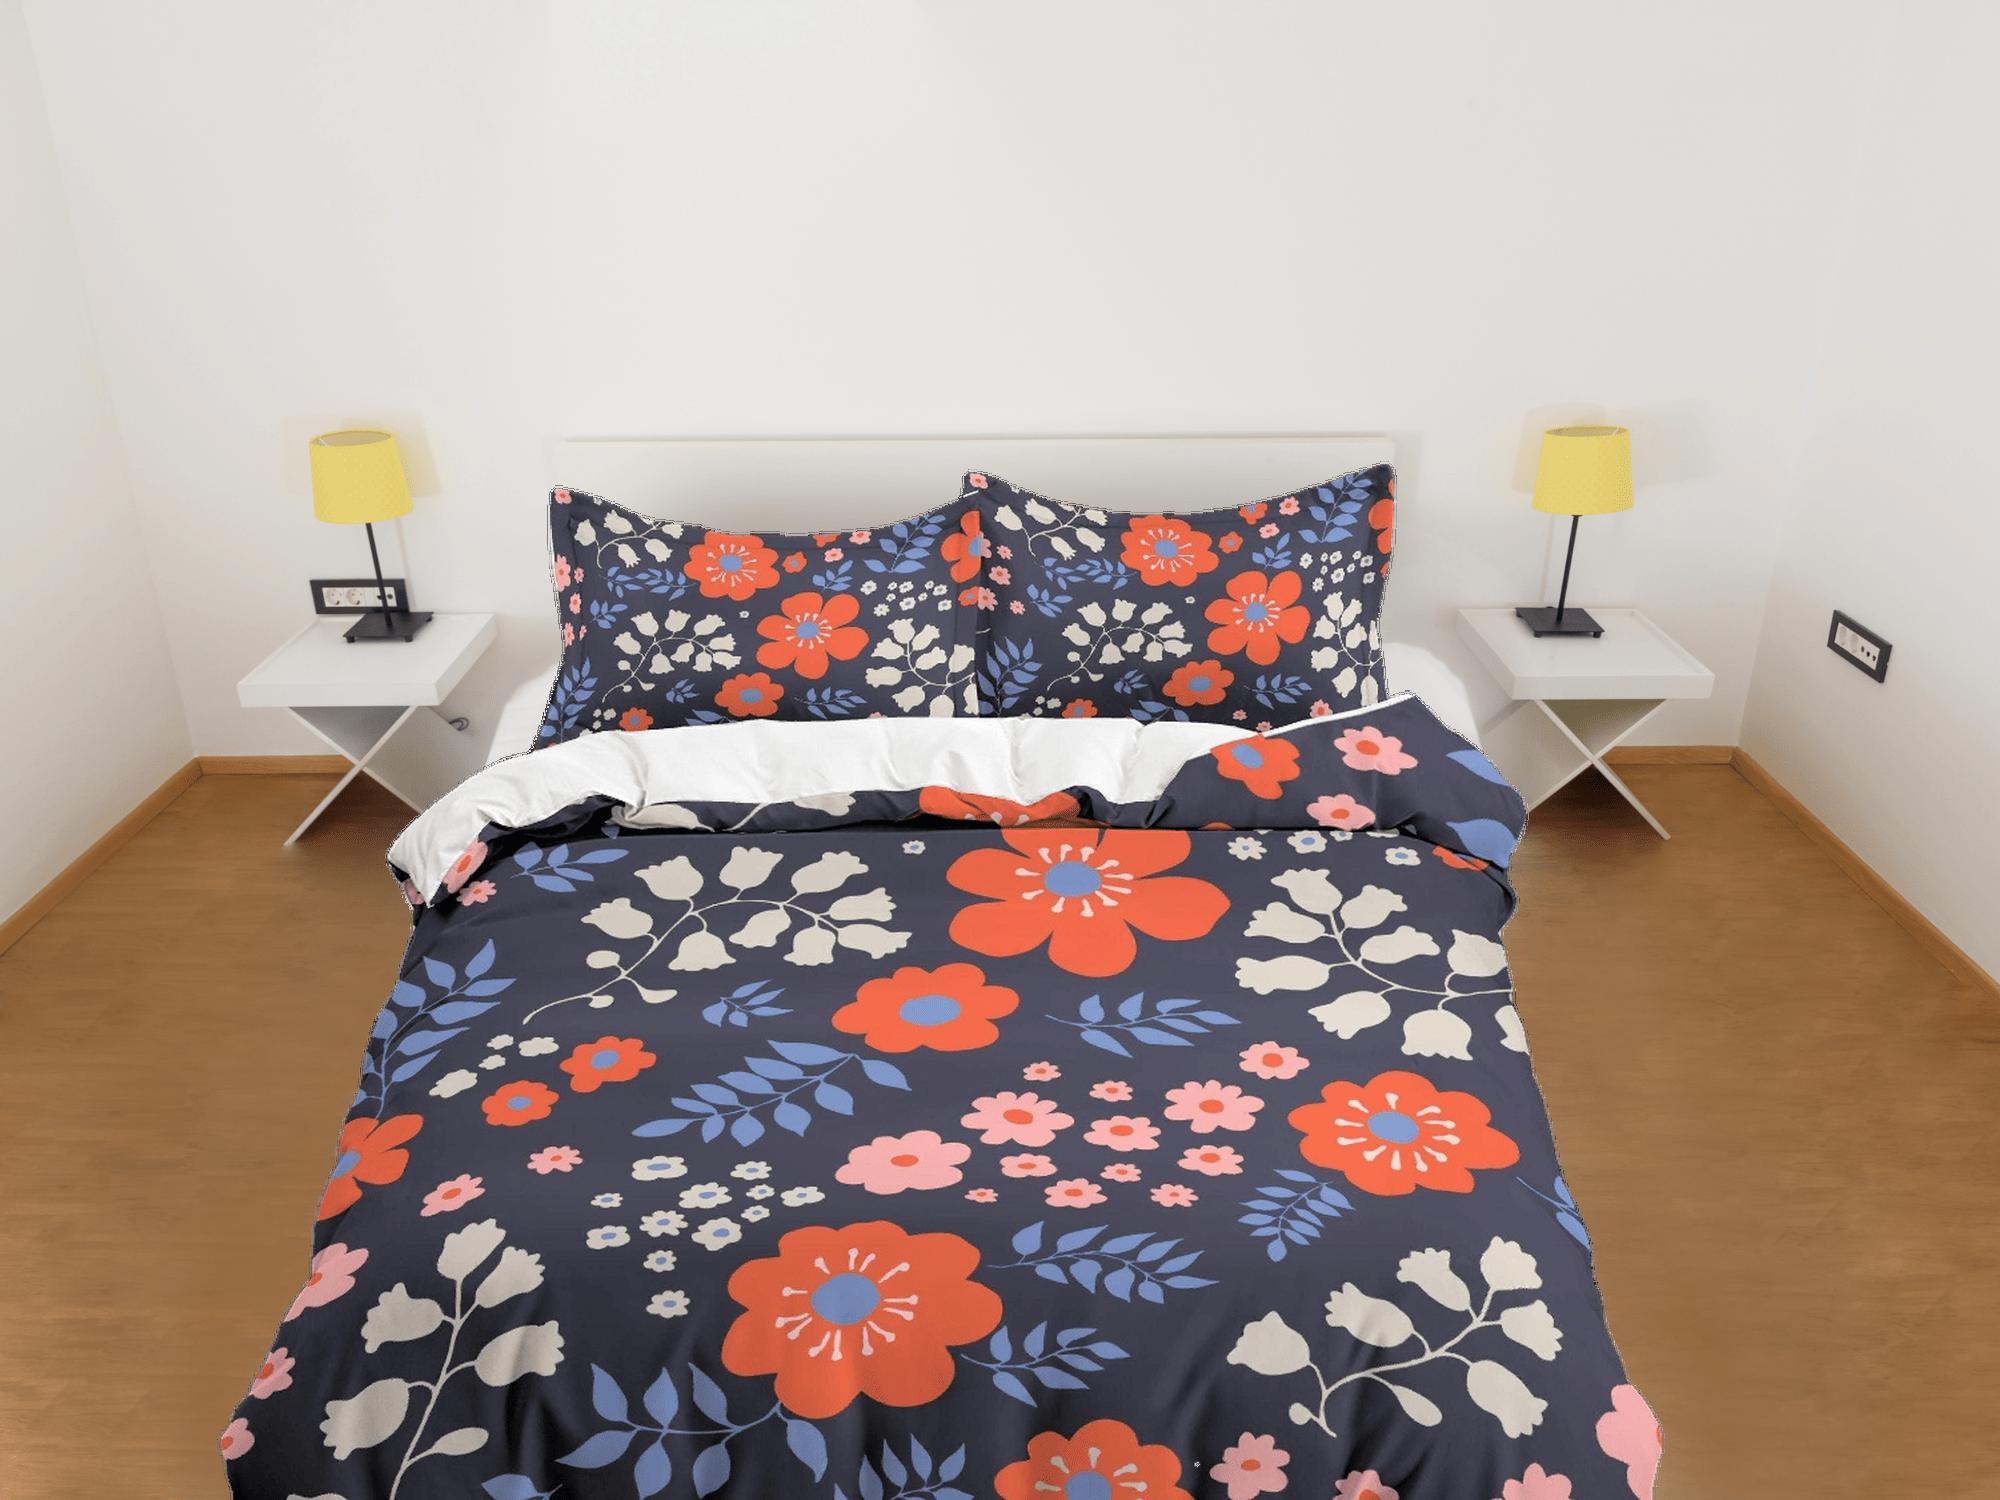 daintyduvet Red poppies floral dark blue duvet cover colorful bedding, teen girl bedroom, baby girl crib bedding boho maximalist aesthetic bedding